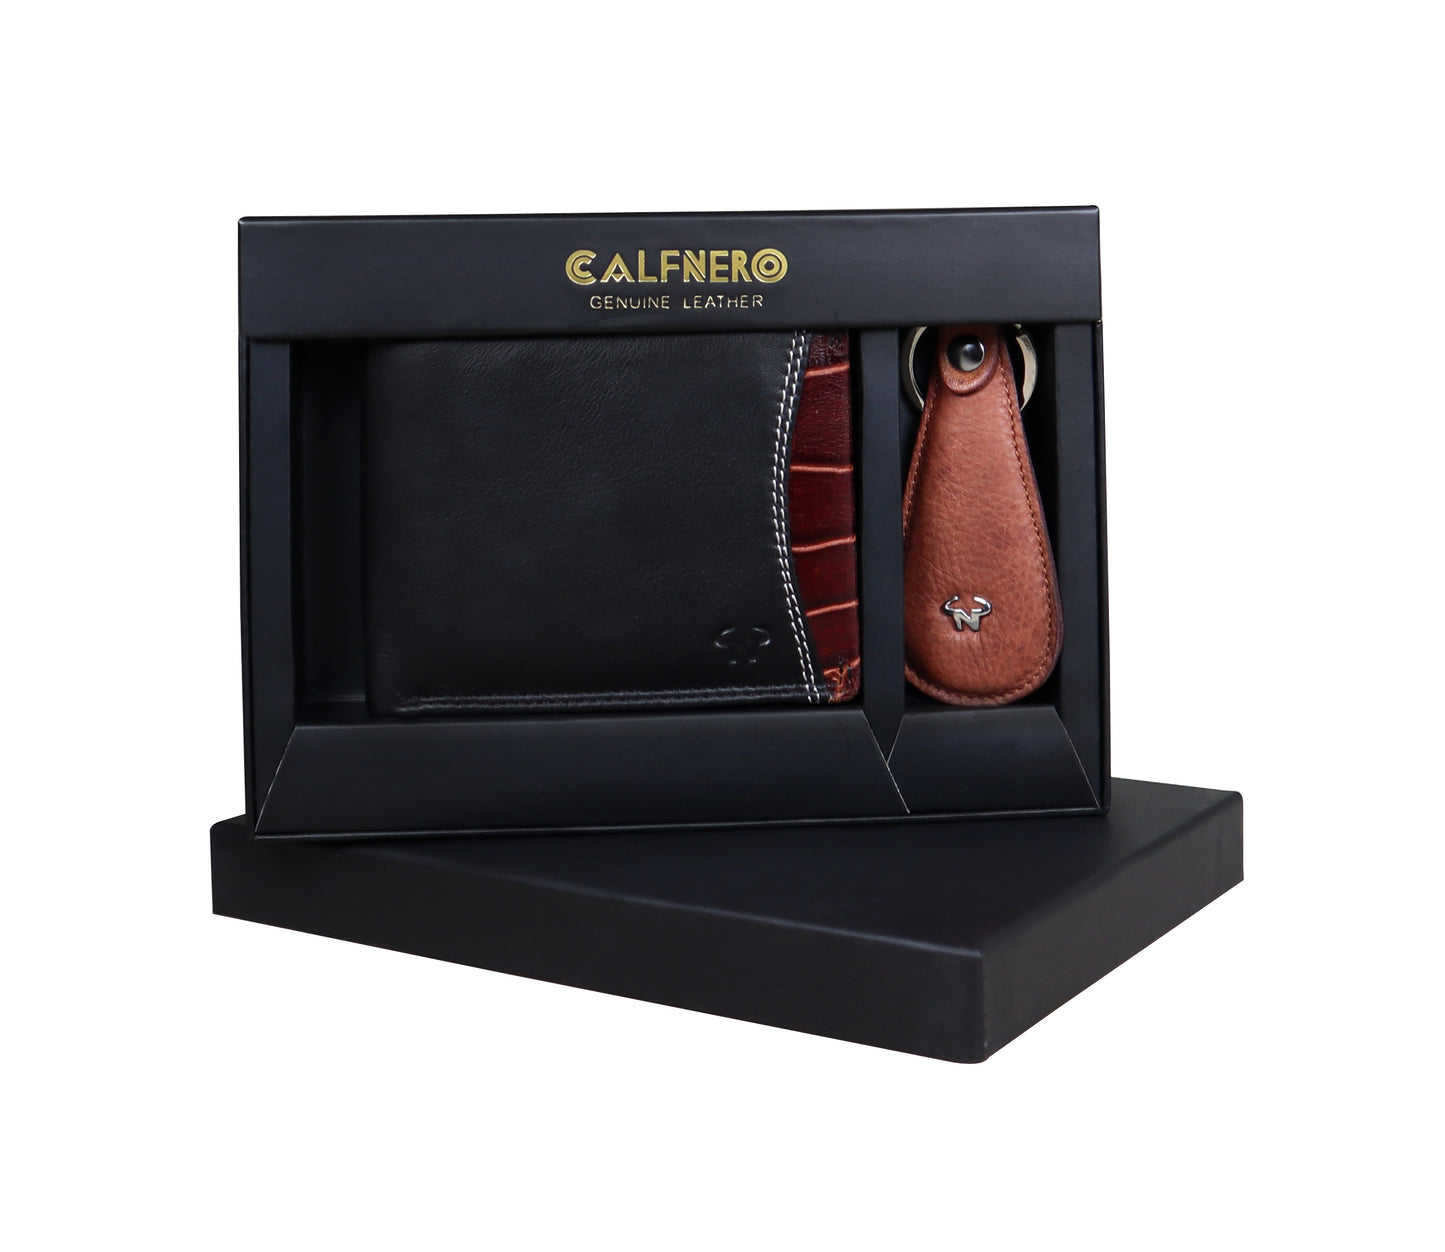 Calfnero Genuine Leather Men's Combo (CCM-001-Black)